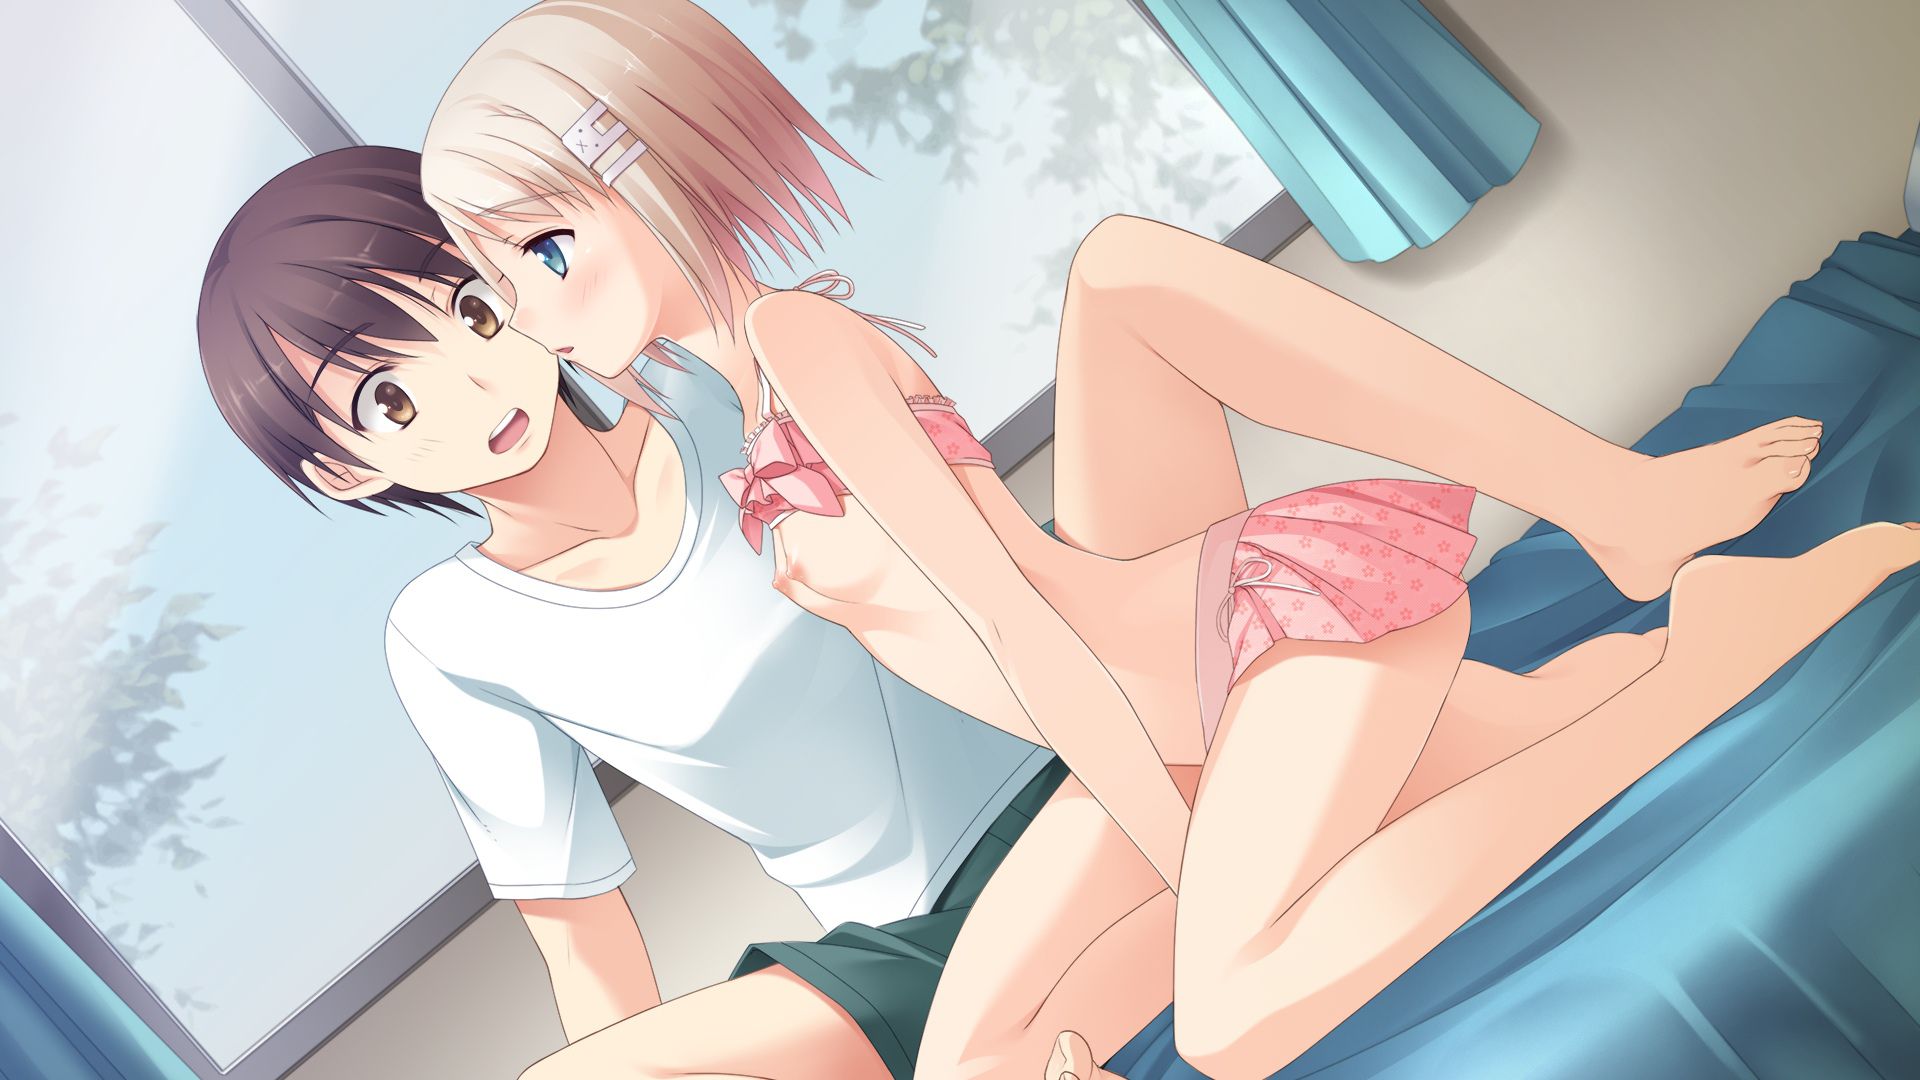 Imoutnokataci [18 PC Bishoujo game CG] erotic wallpapers and pictures 3 4